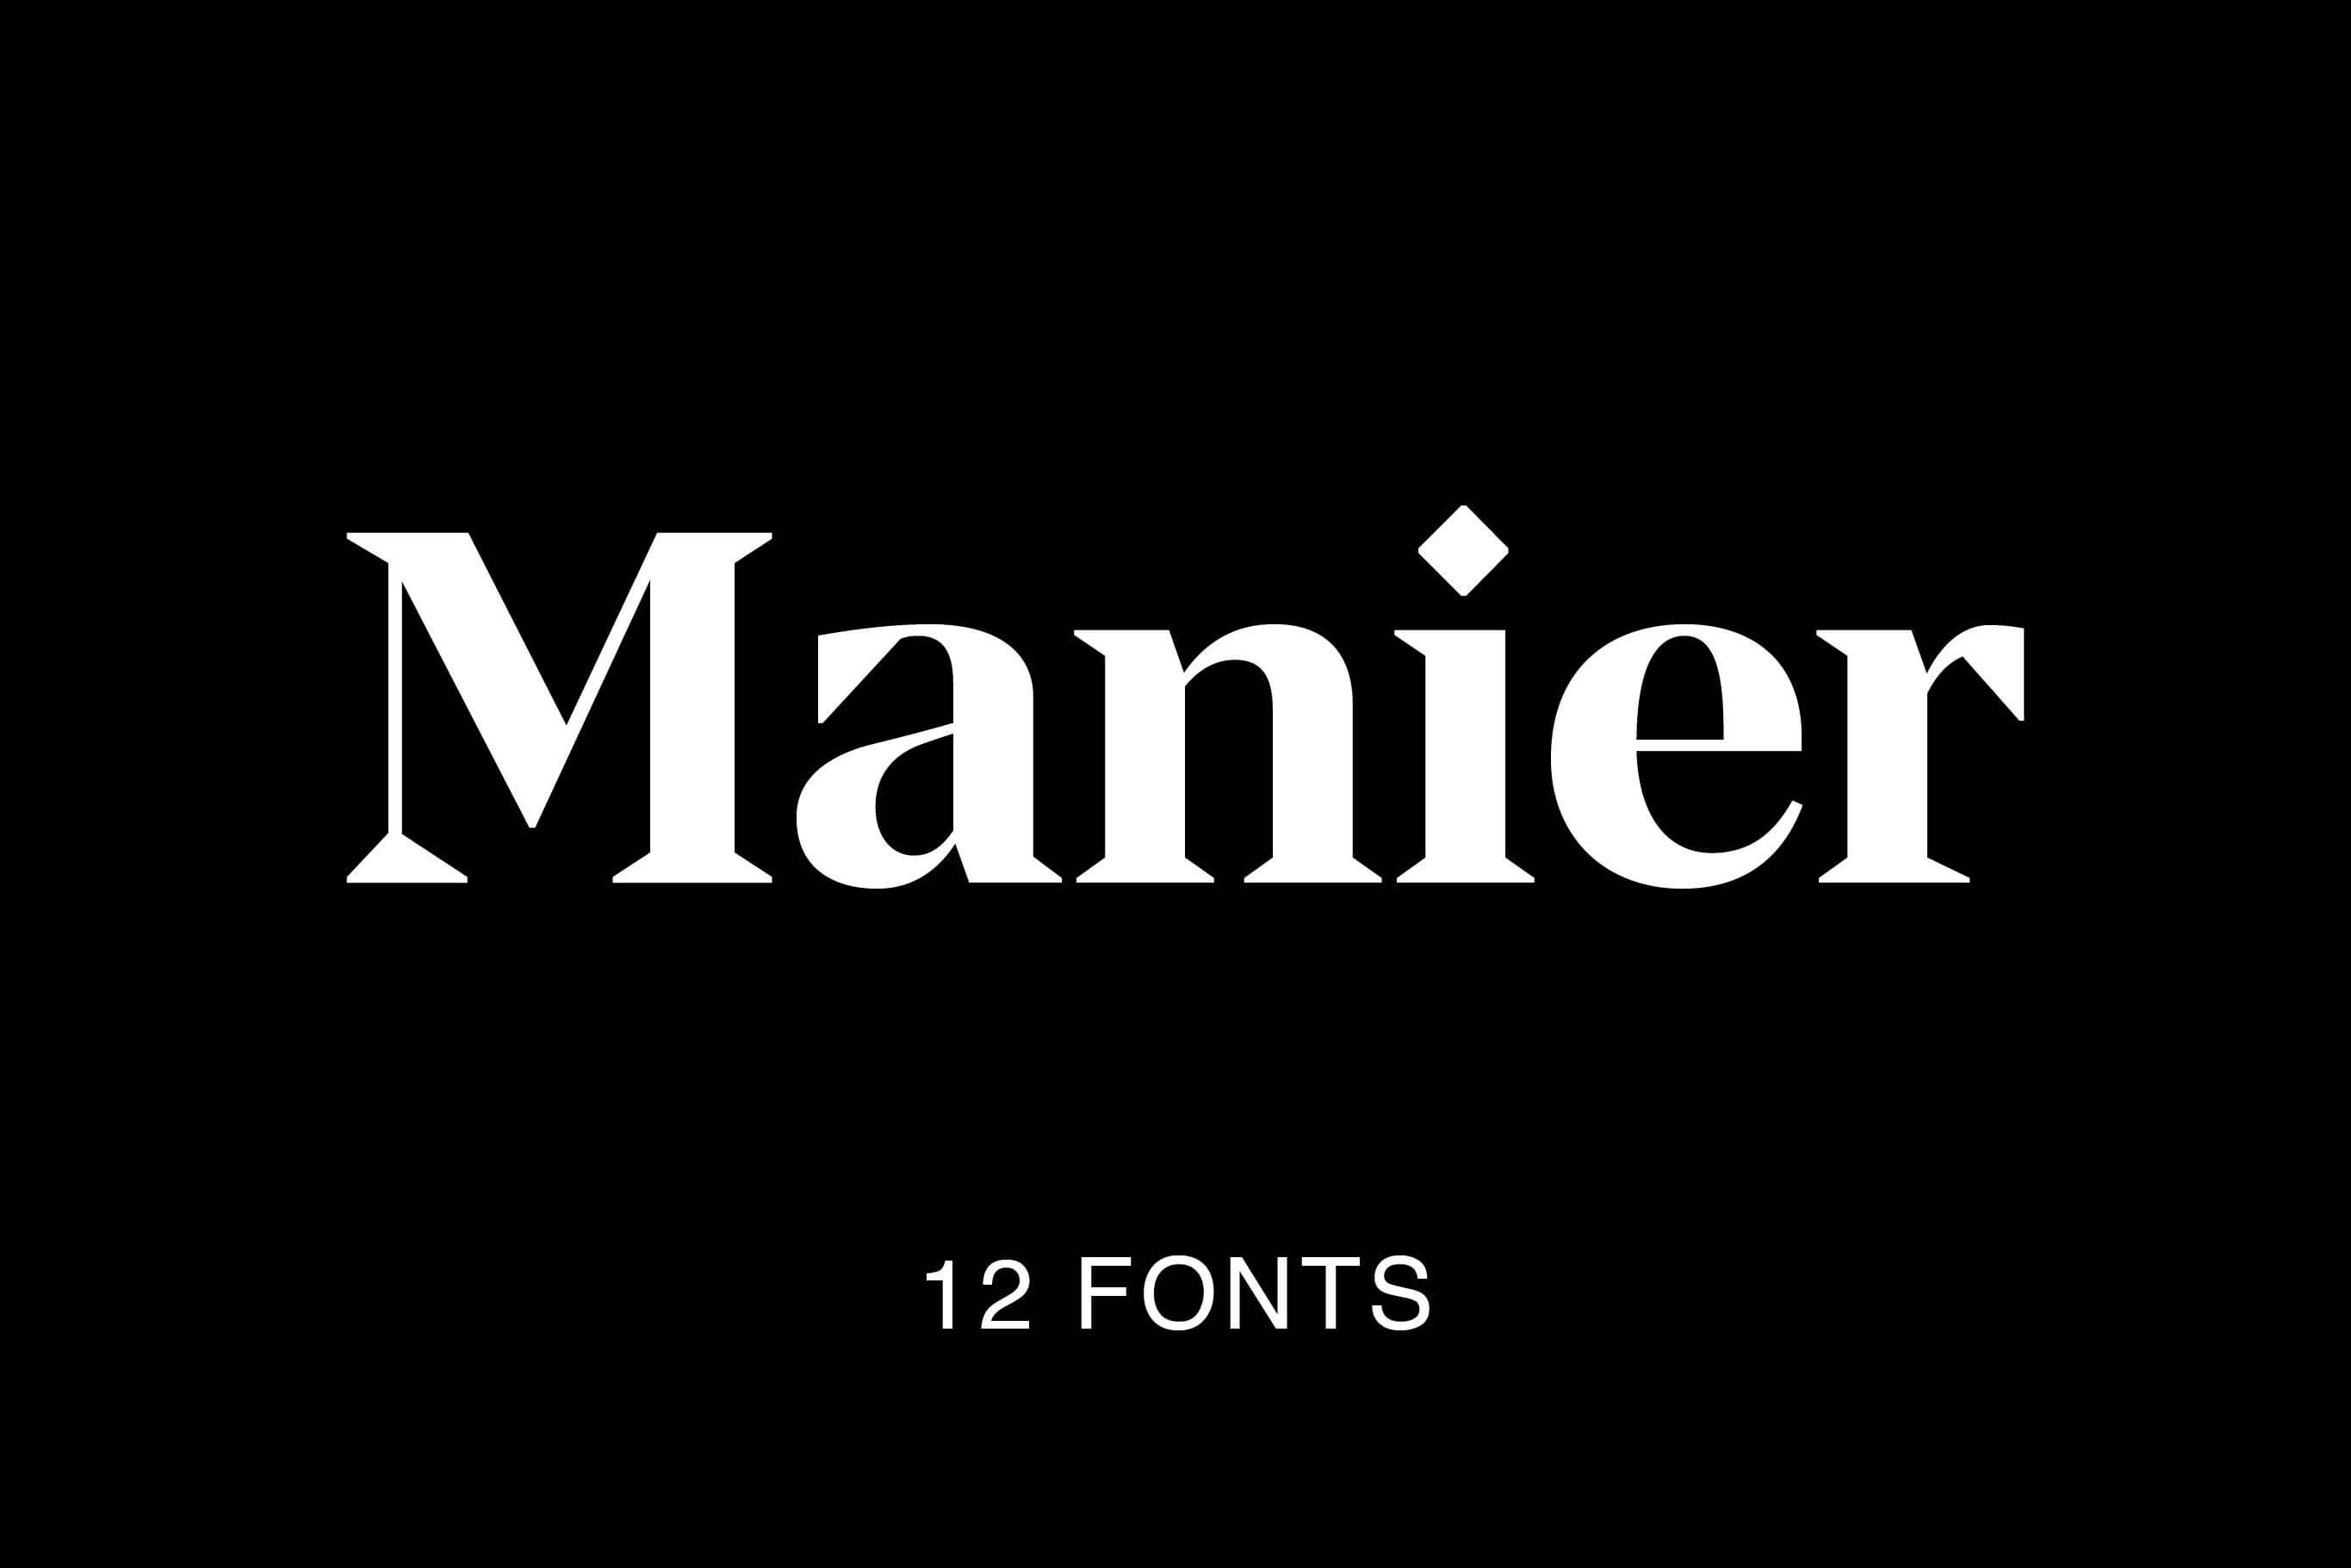 Manier – Sharp Serif Typeface cover image.